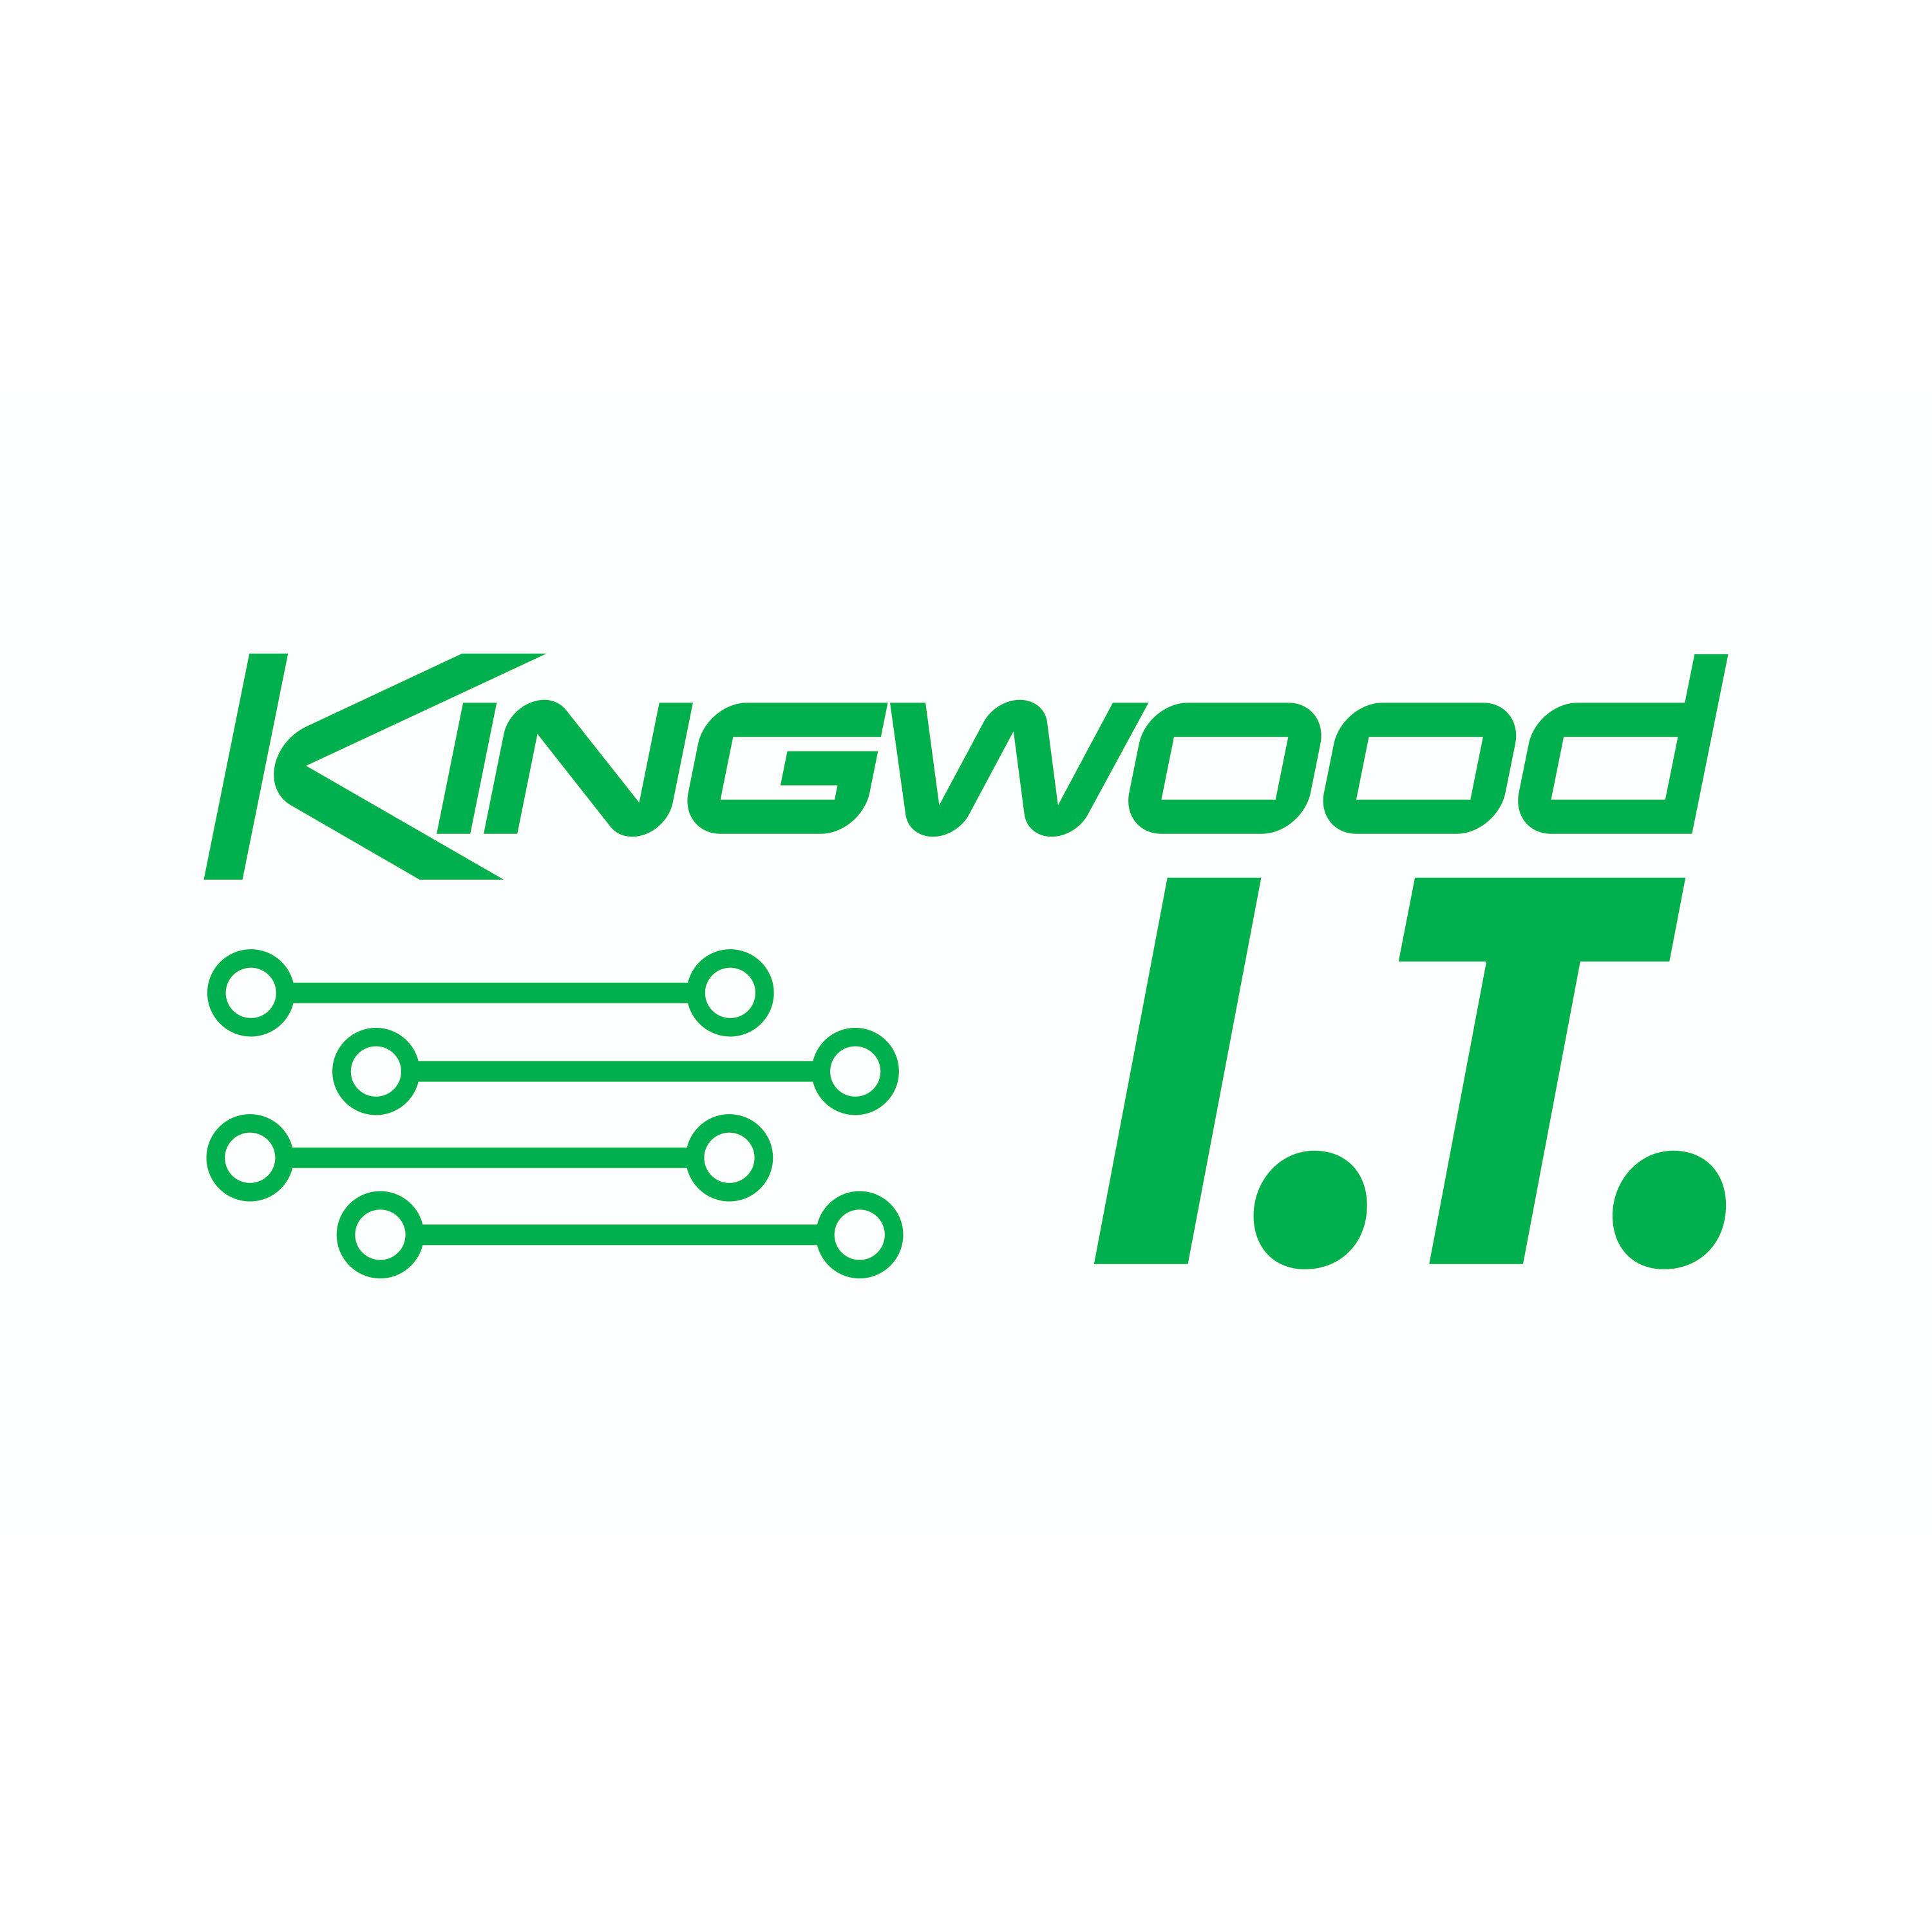 Kingwood I.T. - Kingwood, TX 77339 - (281)360-3300 | ShowMeLocal.com